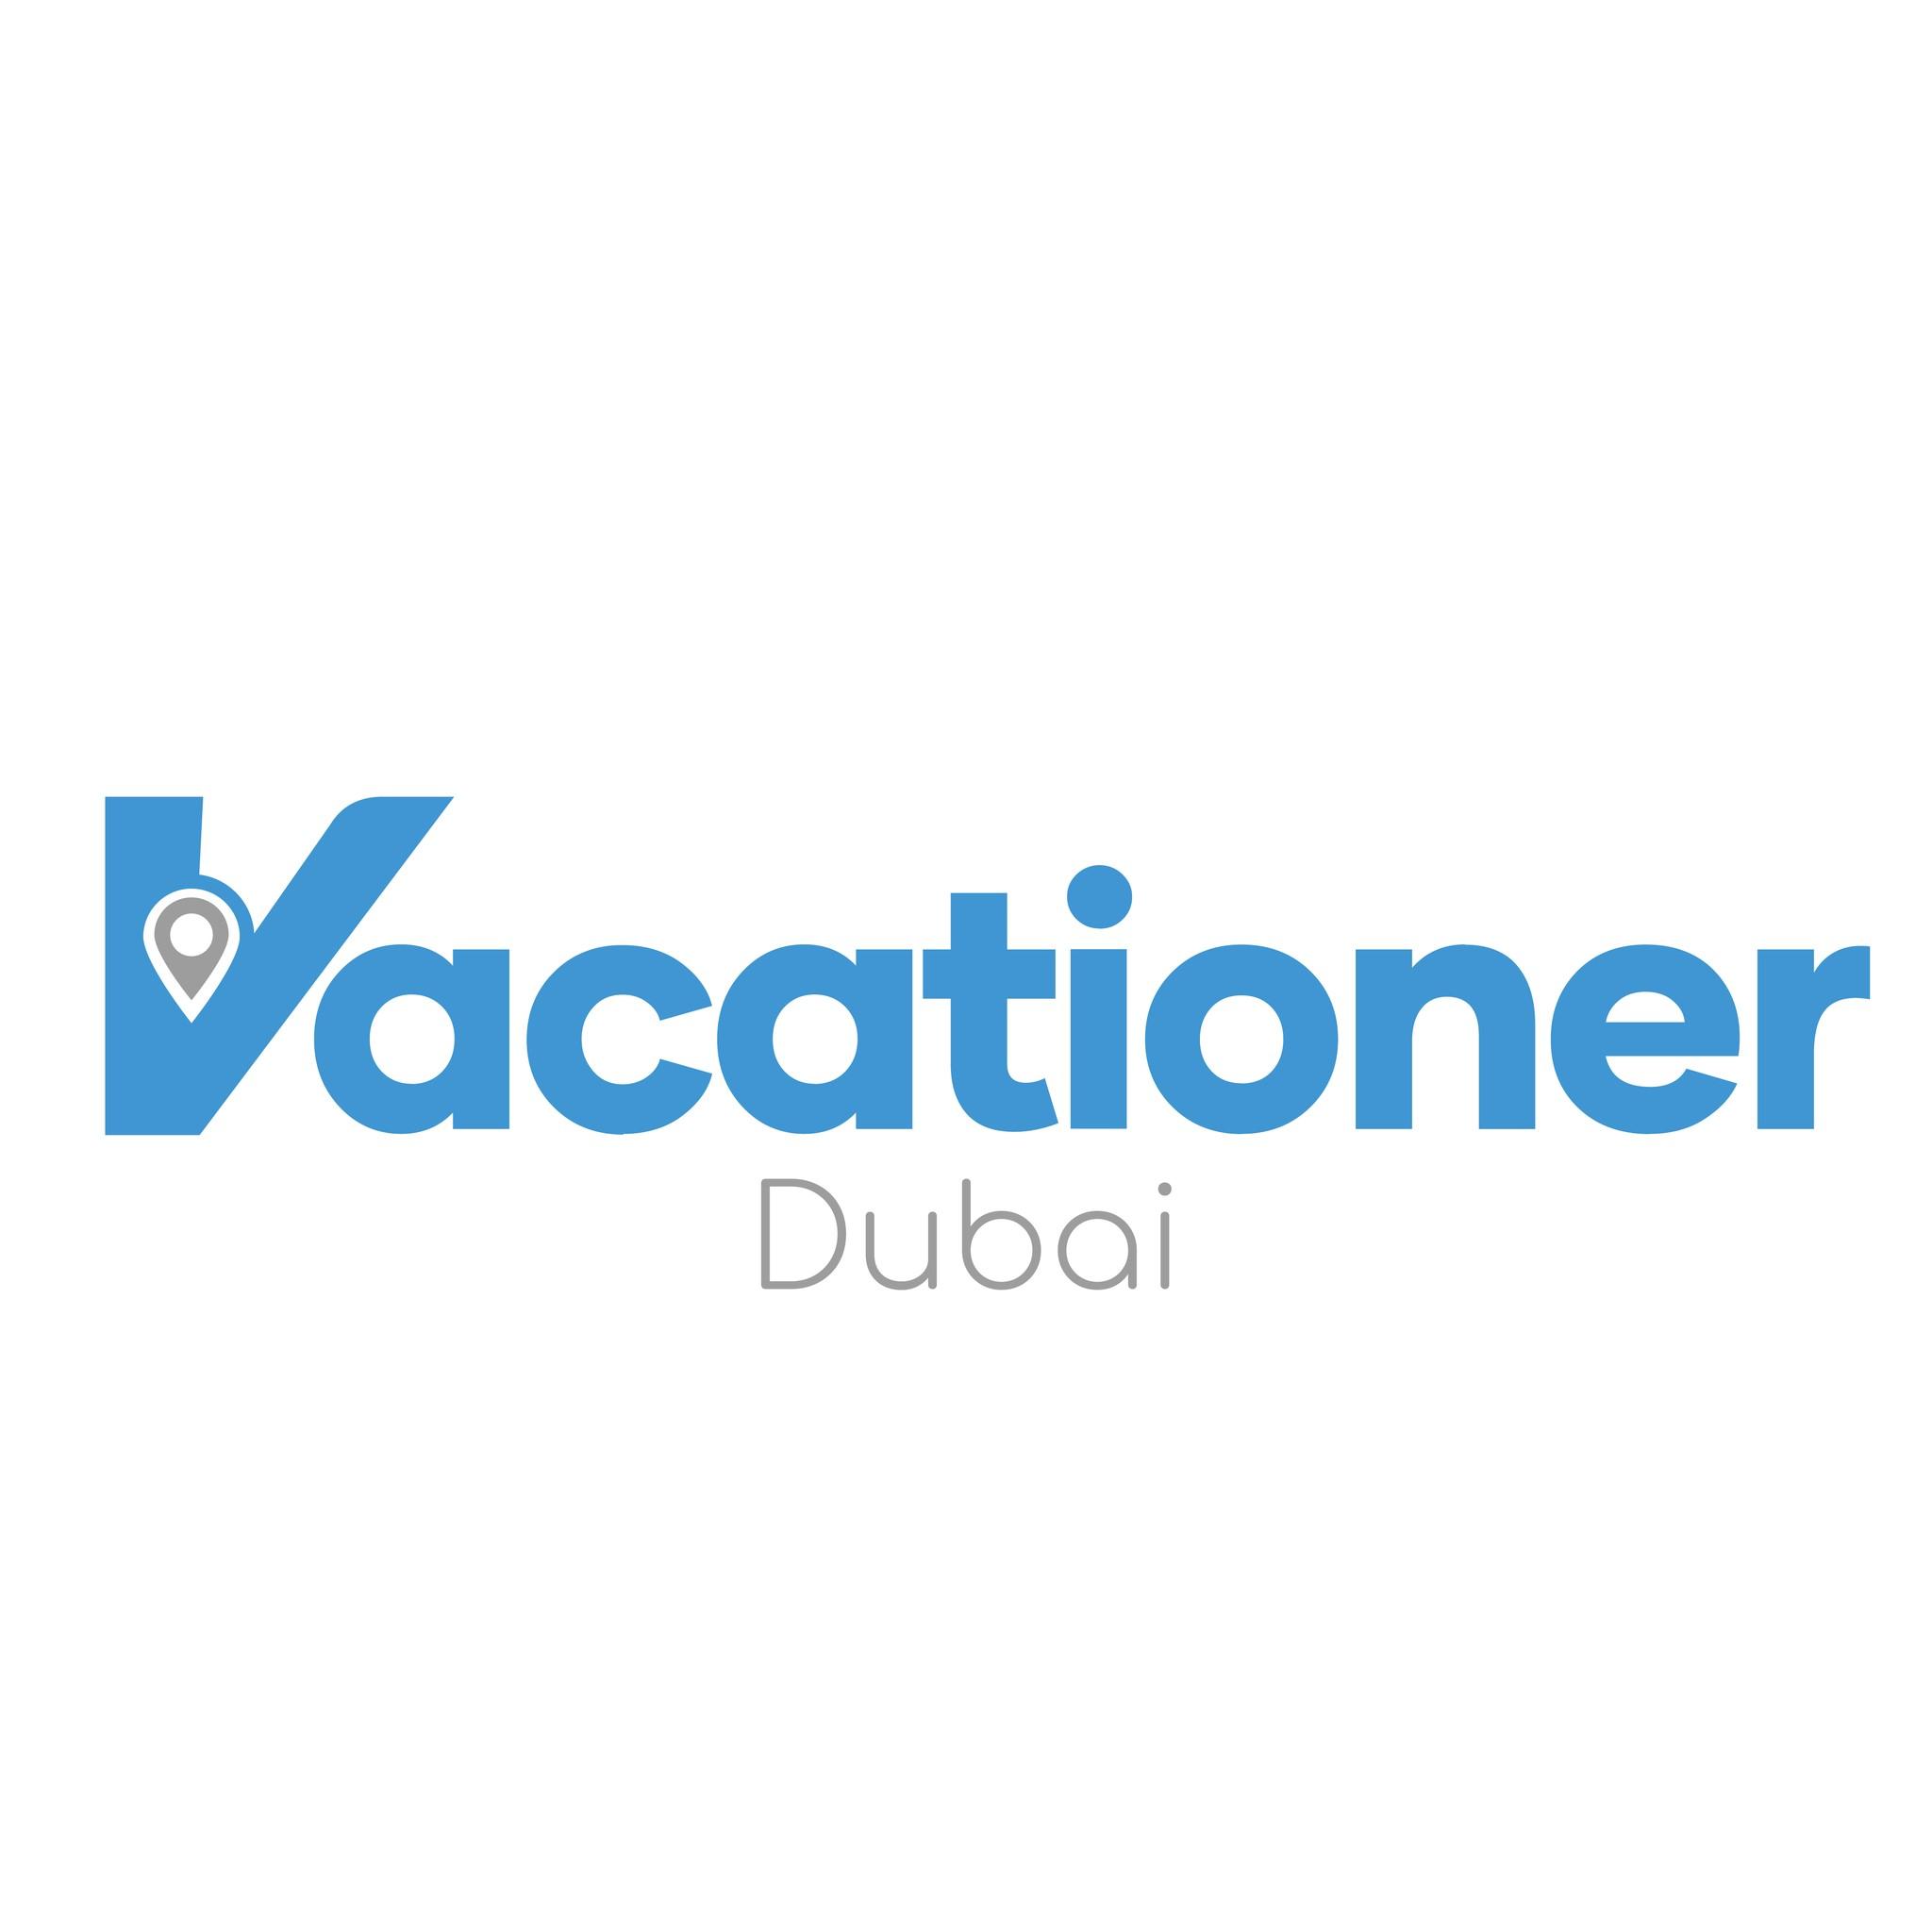 Vacationer Dubai